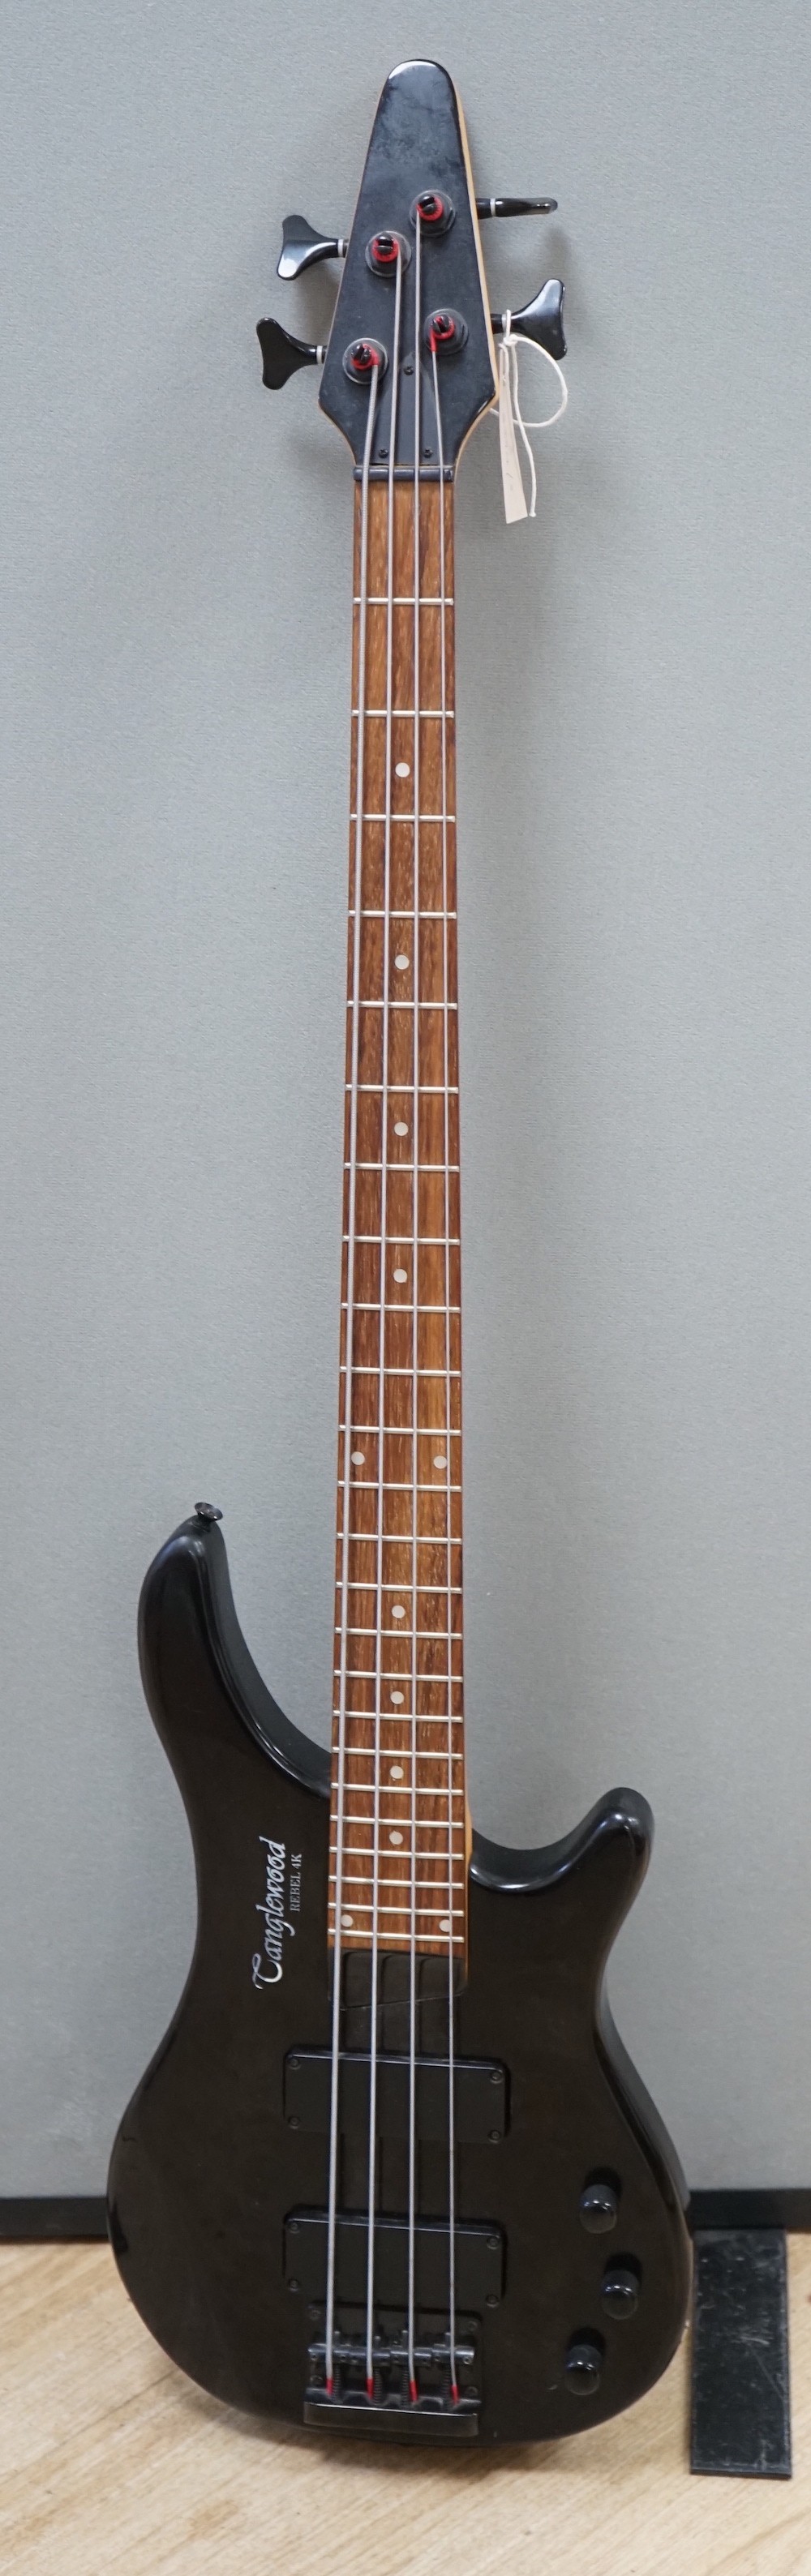 A Tanglewood rebel 4k bass guitar